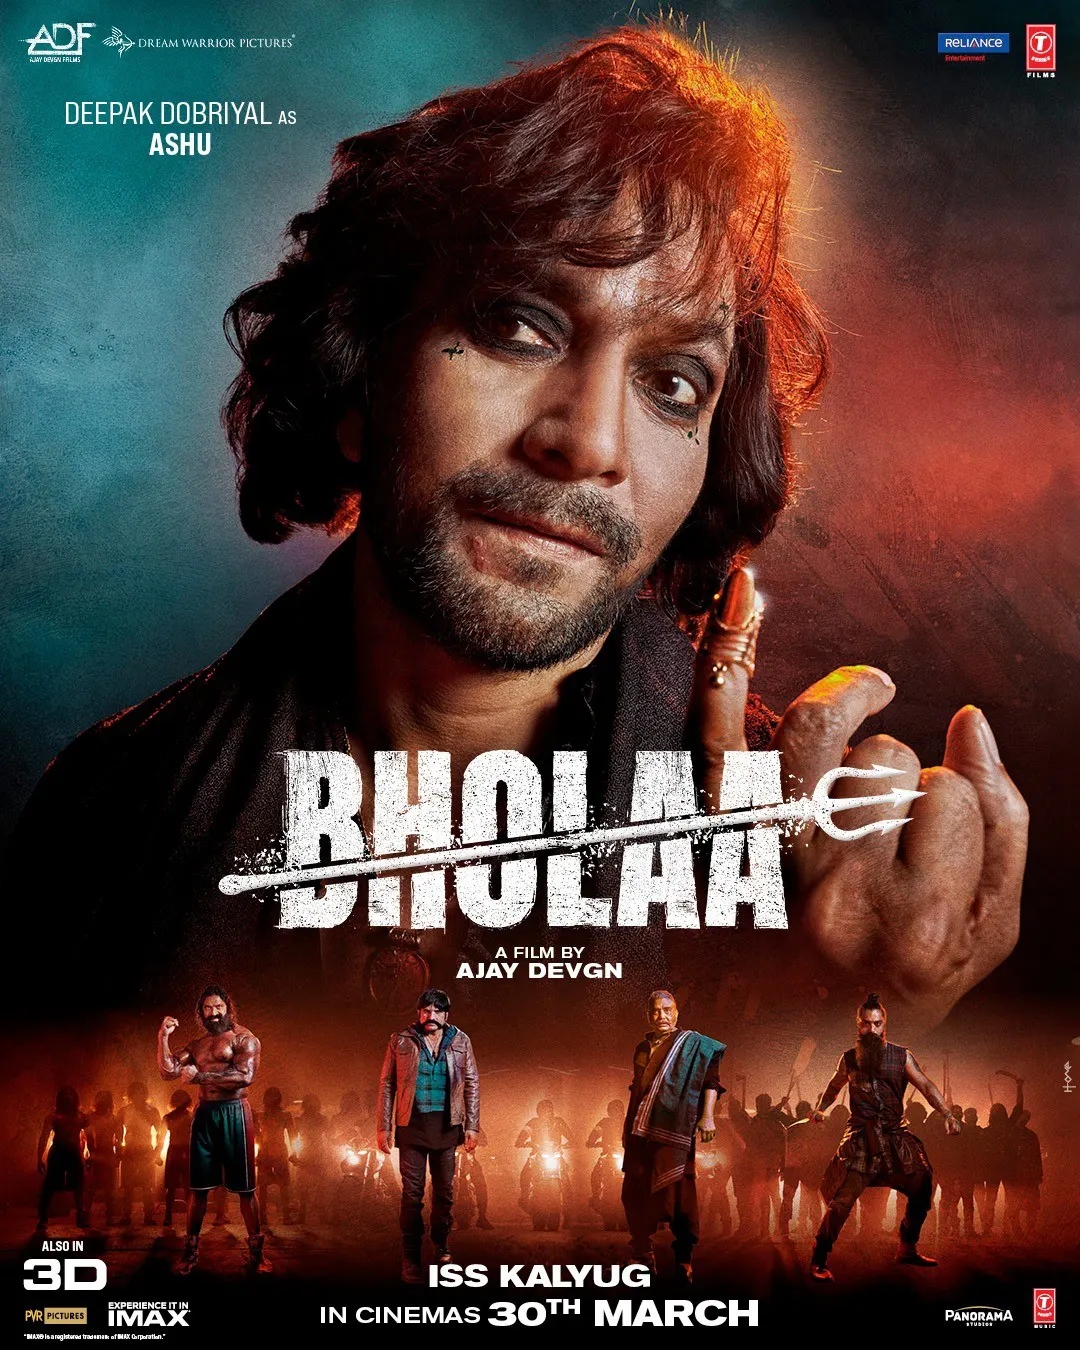 Deepak Dobriyal as Ashu in Bholaa Movie 2023